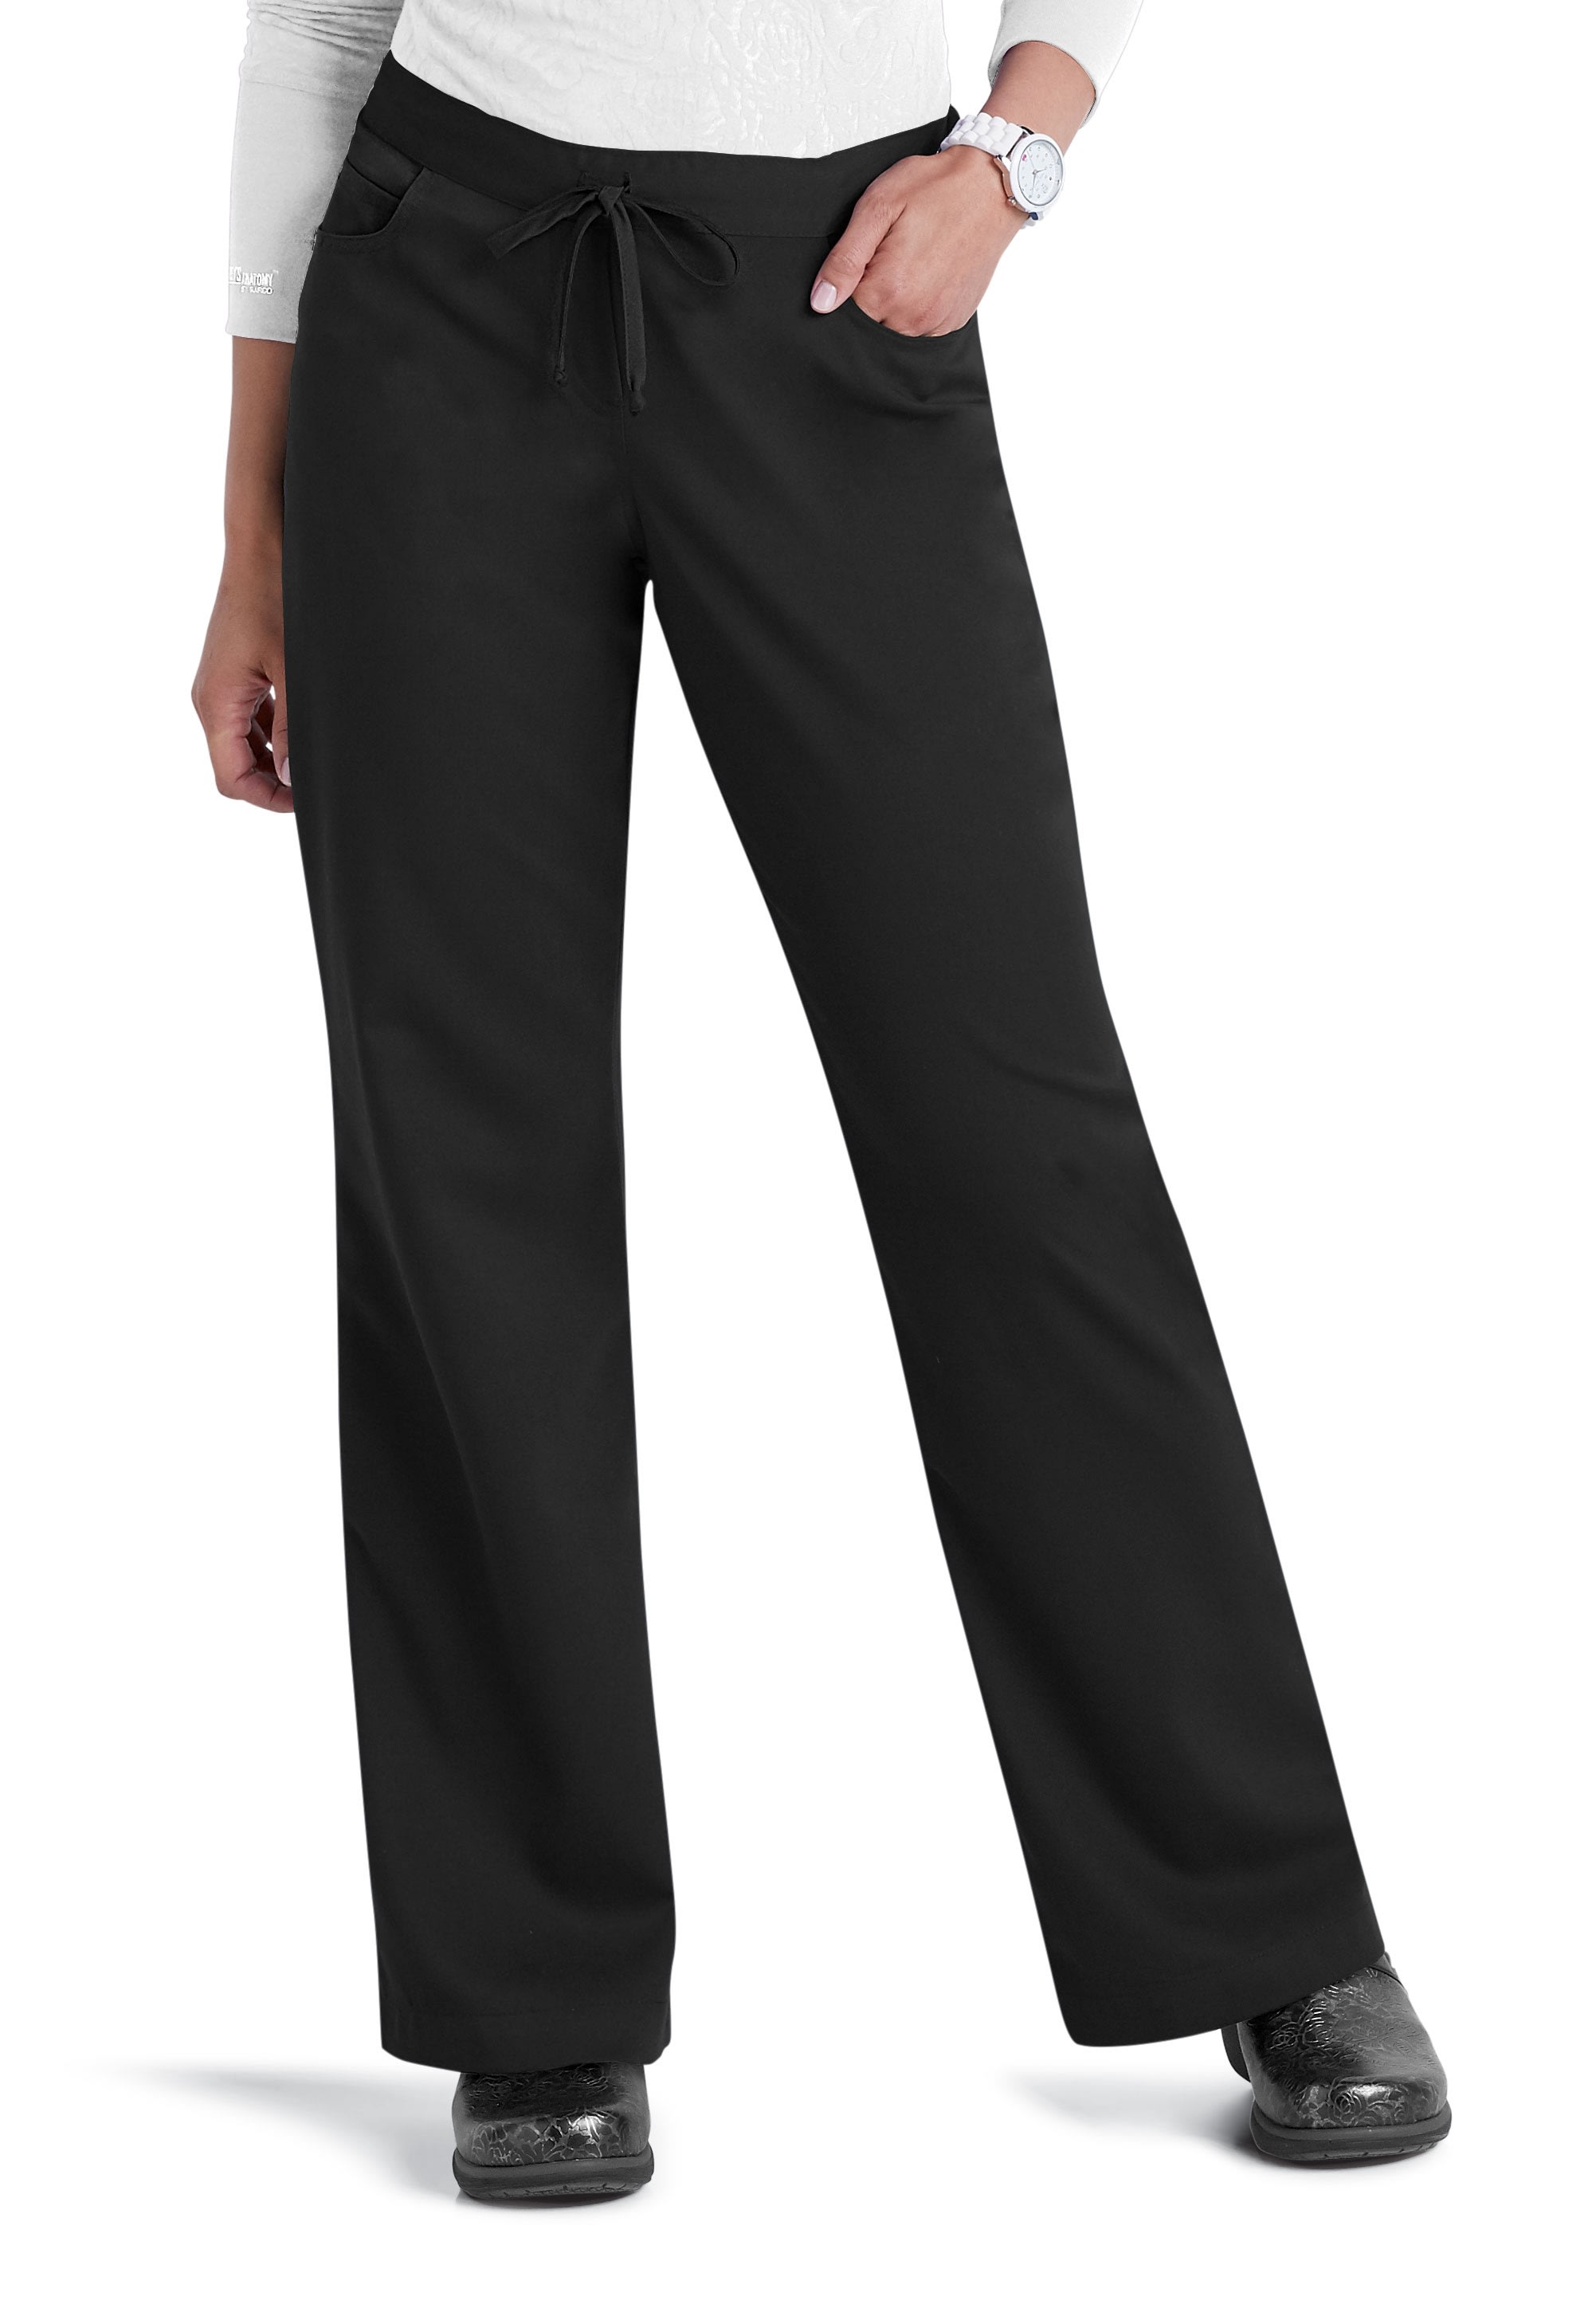 Womens Barco Grey's Anatomy Drawstring Pants Black, 45% OFF